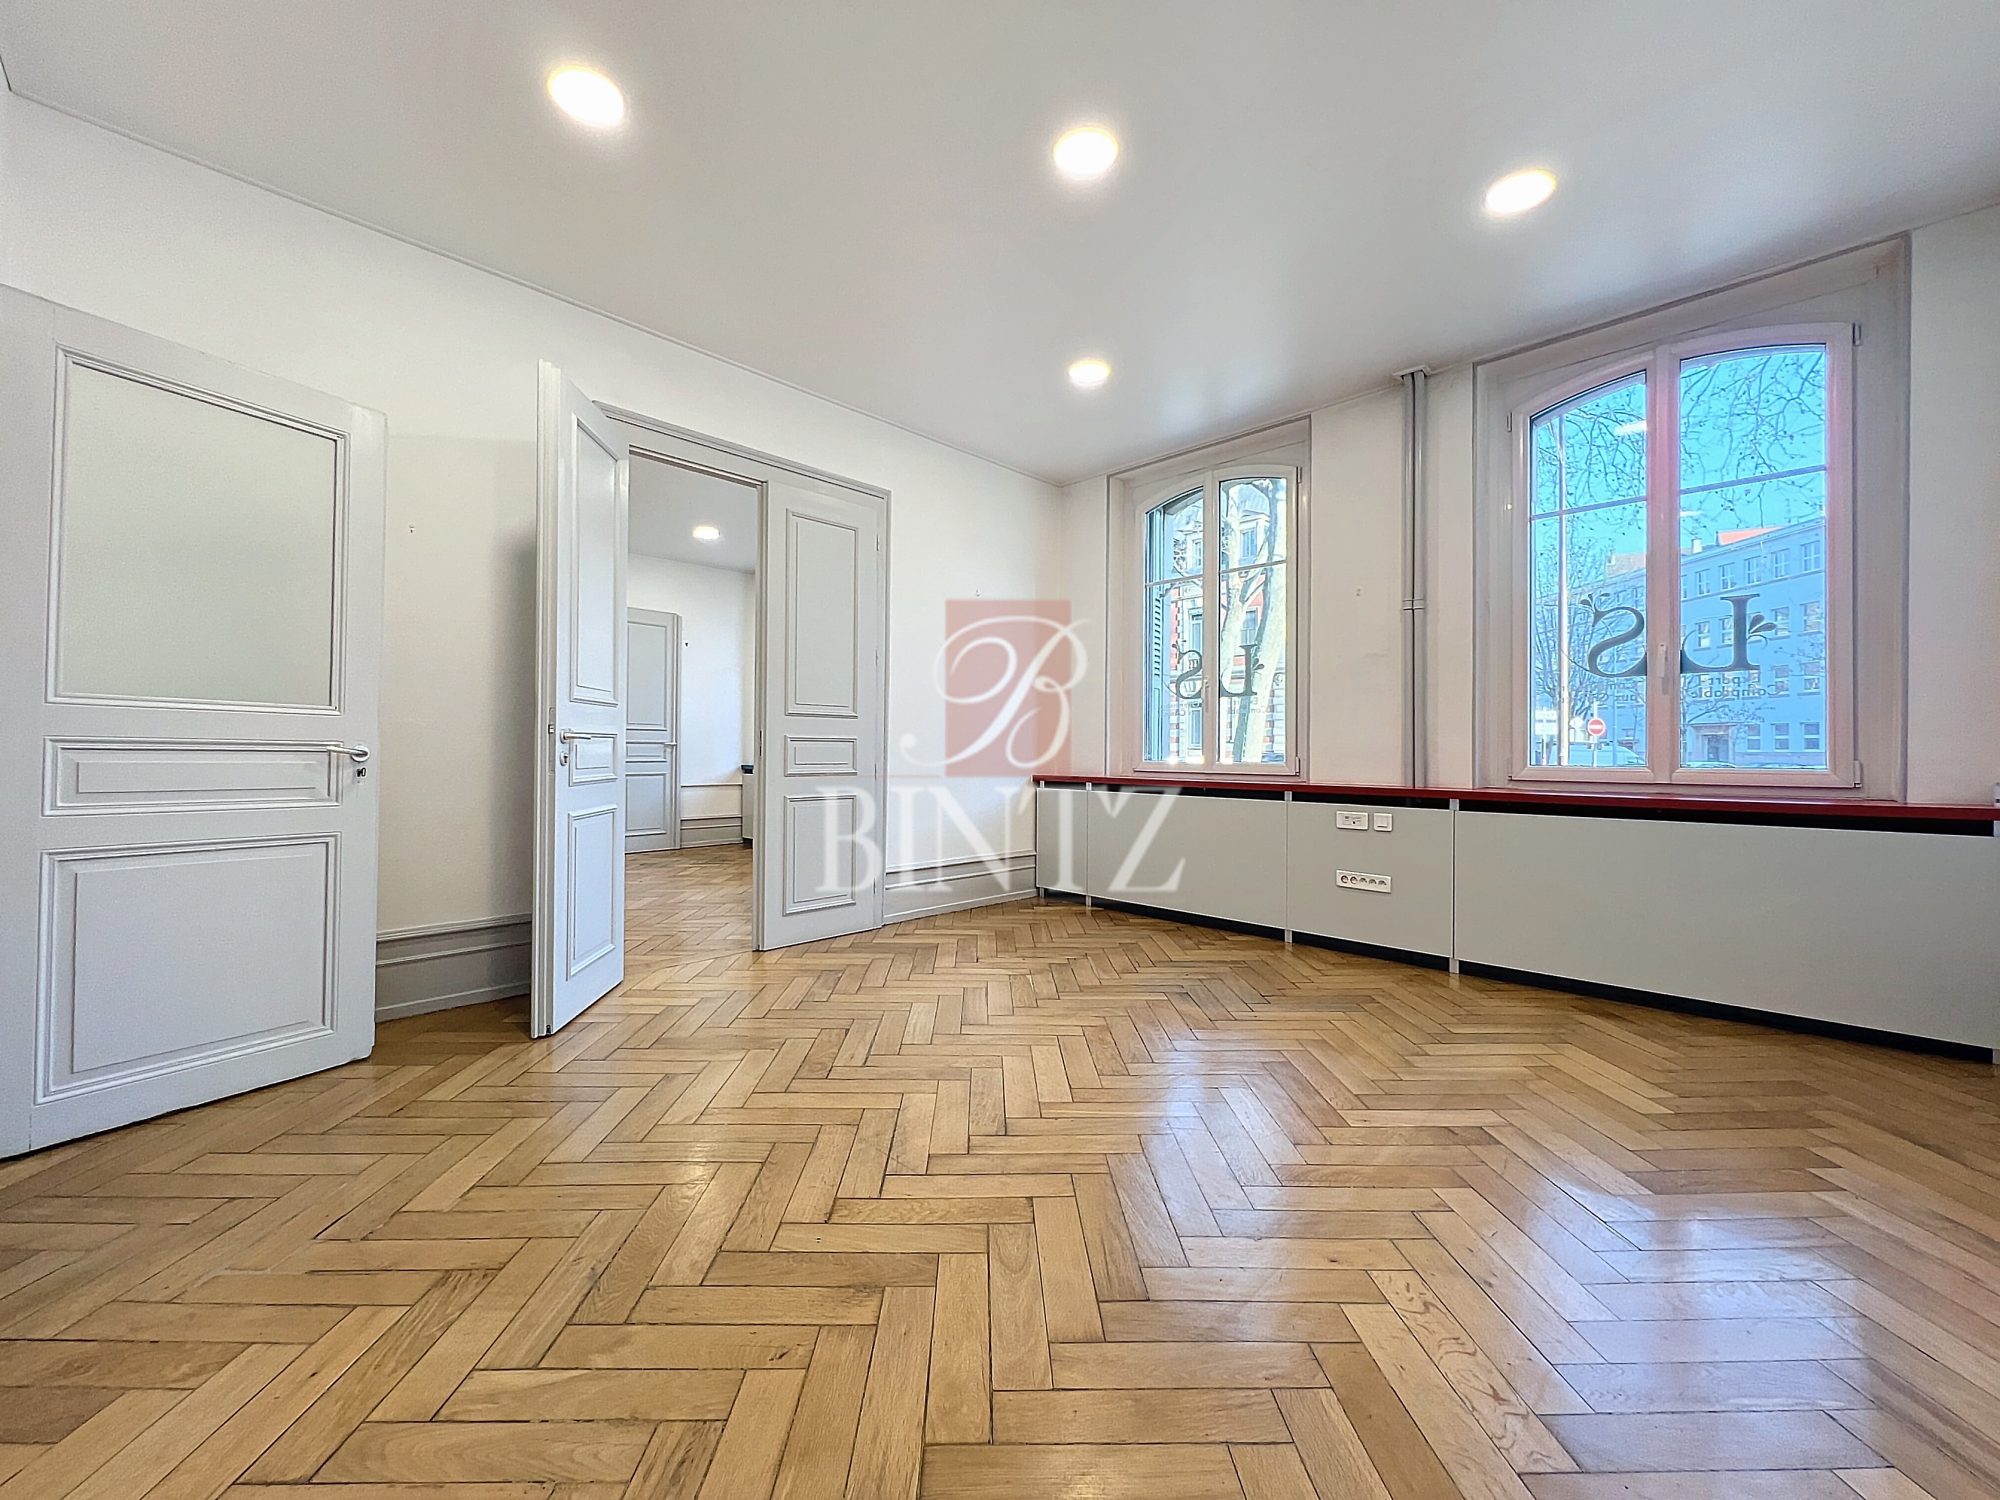 Local professionnel Neustadt - maison à vendre Strasbourg - Bintz Immobilier - 2